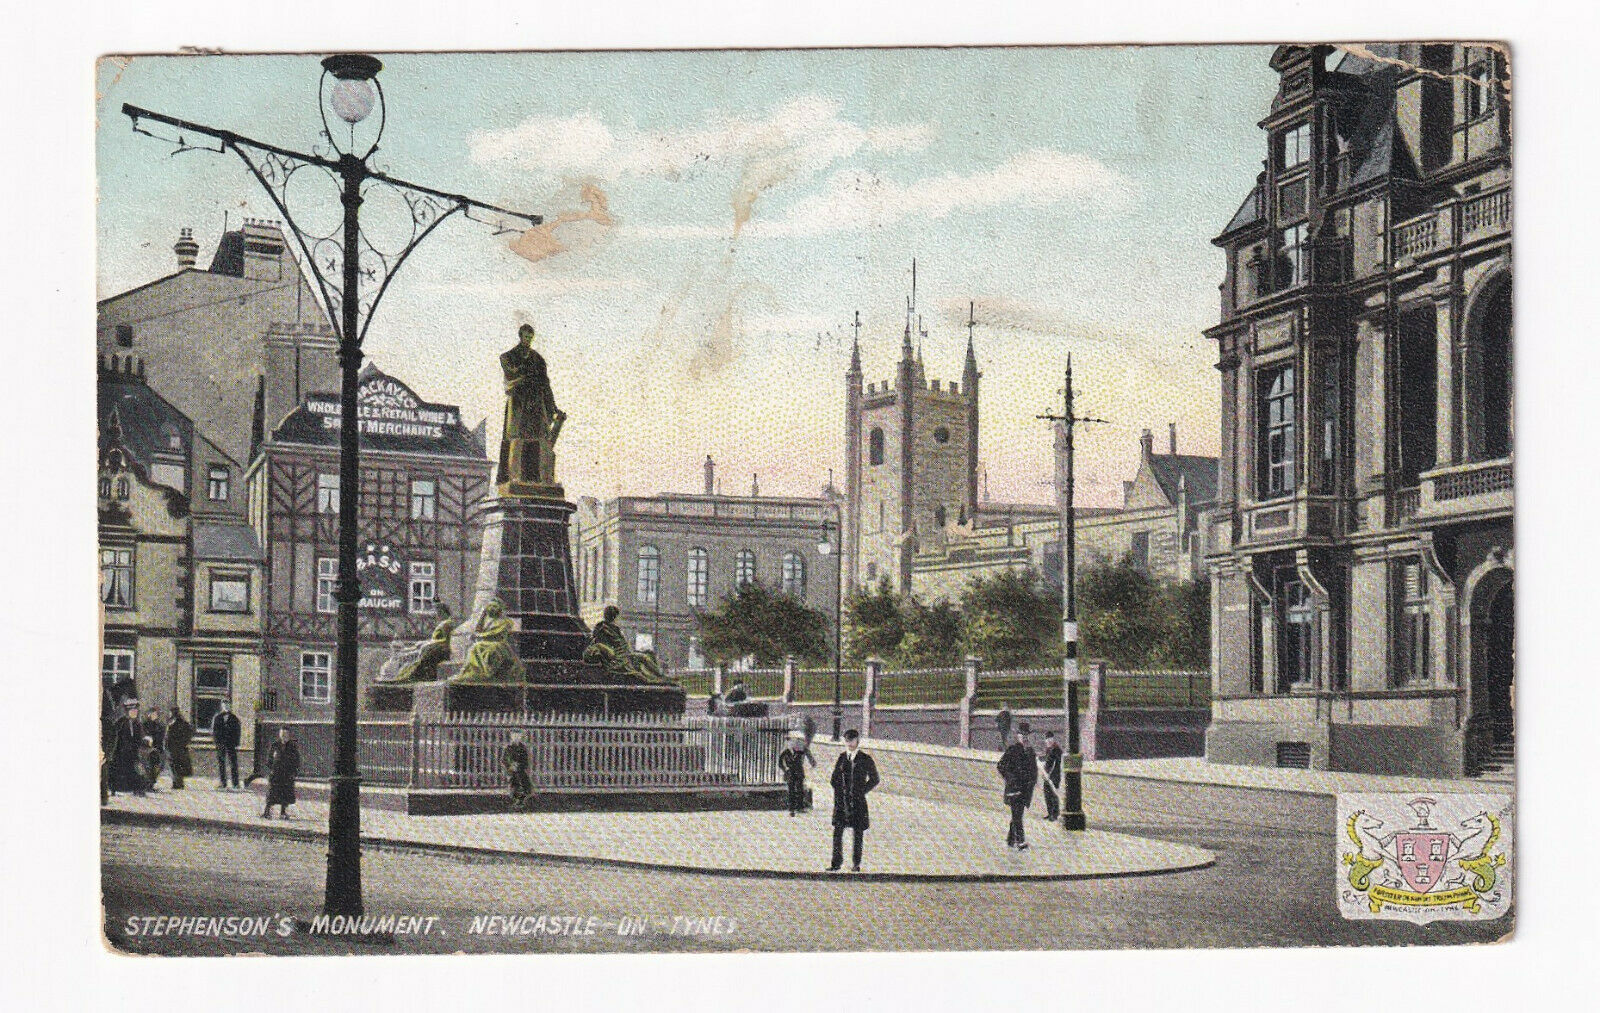 Printed Service, Stephenson's Monumnet, Newcastle-On-Tyne